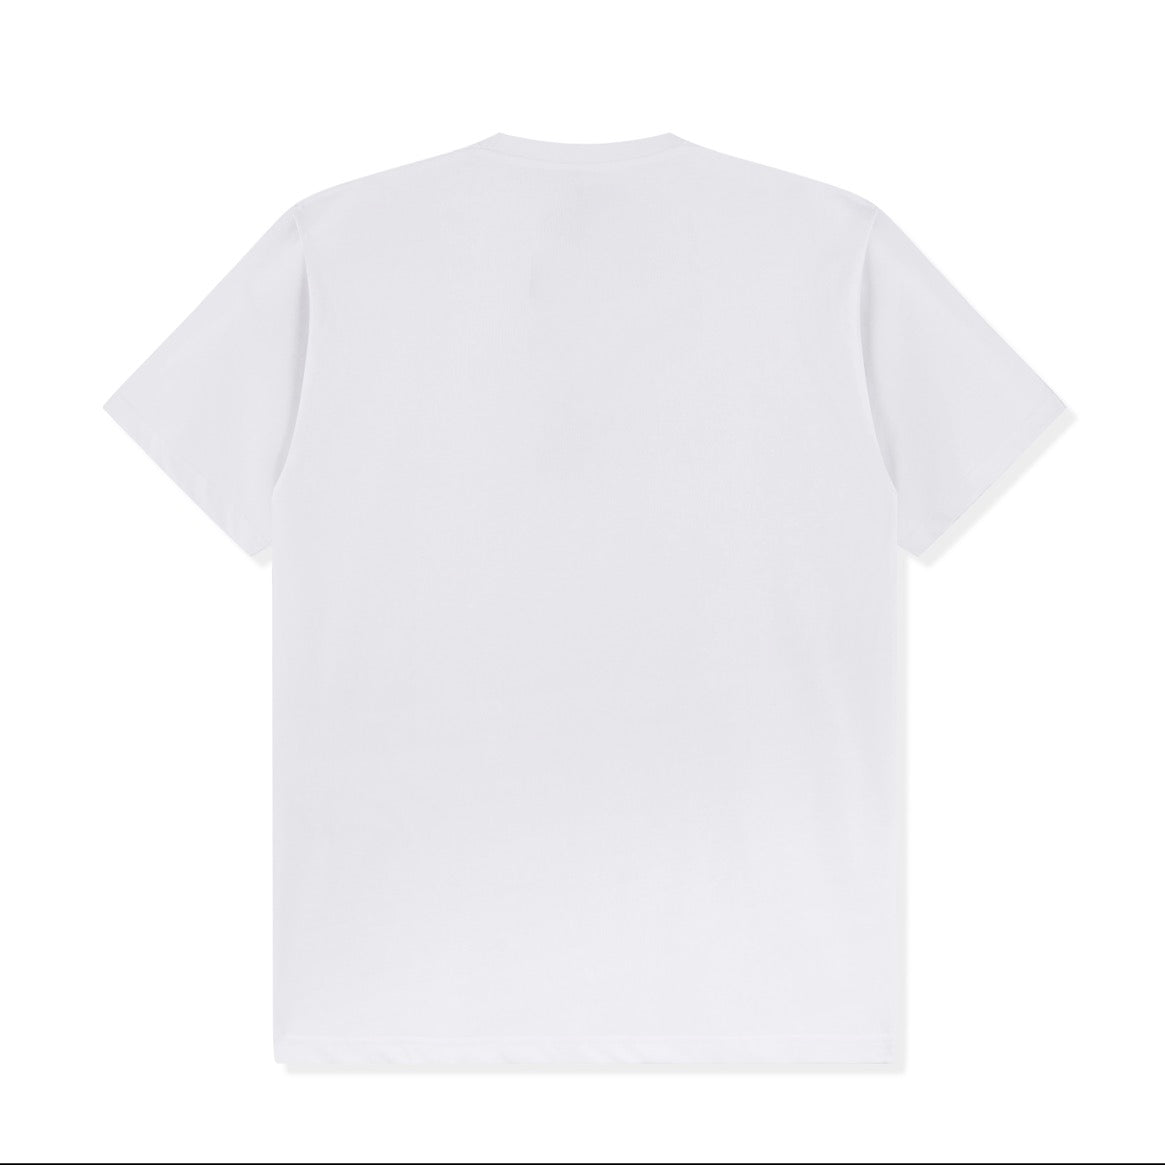 Grey T-Shirt - Size S